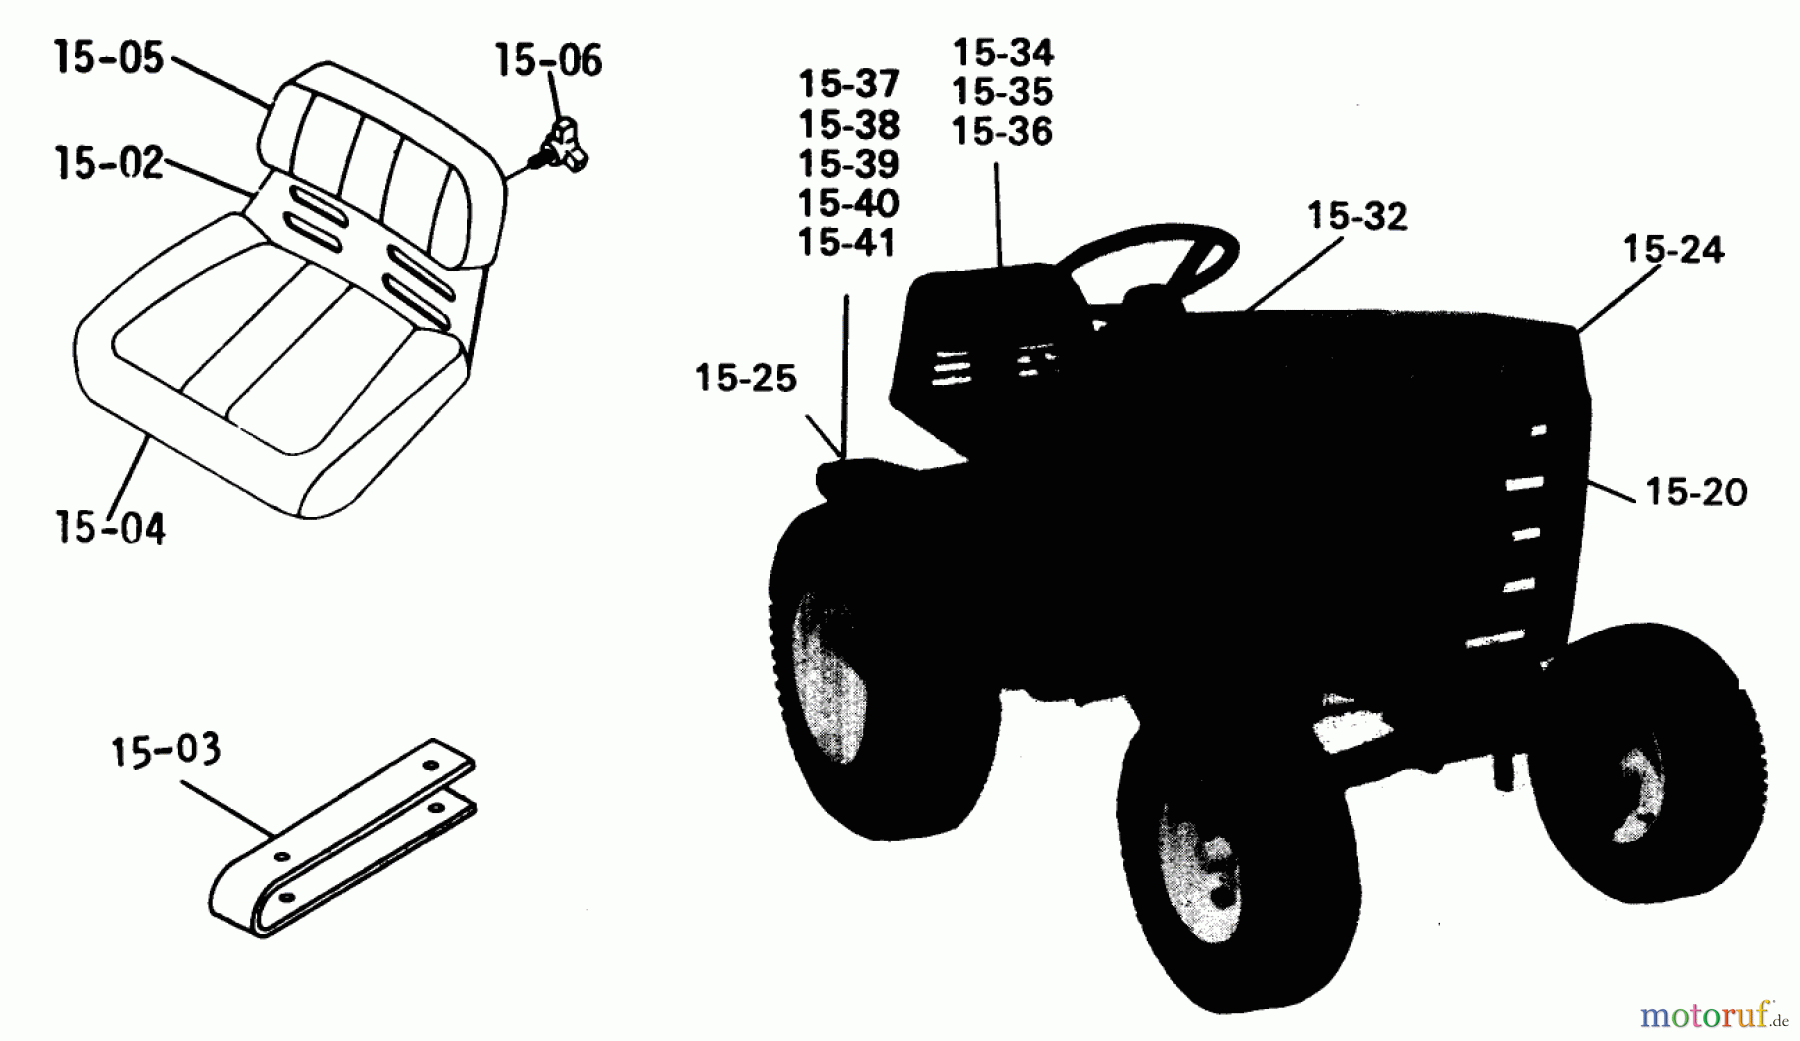  Toro Neu Mowers, Lawn & Garden Tractor Seite 1 1-0391 (C-100) - Toro C-100 8-Speed Tractor, 1975 15.000 SEATS, DECALS MISC. TRIM (FIG. 15)